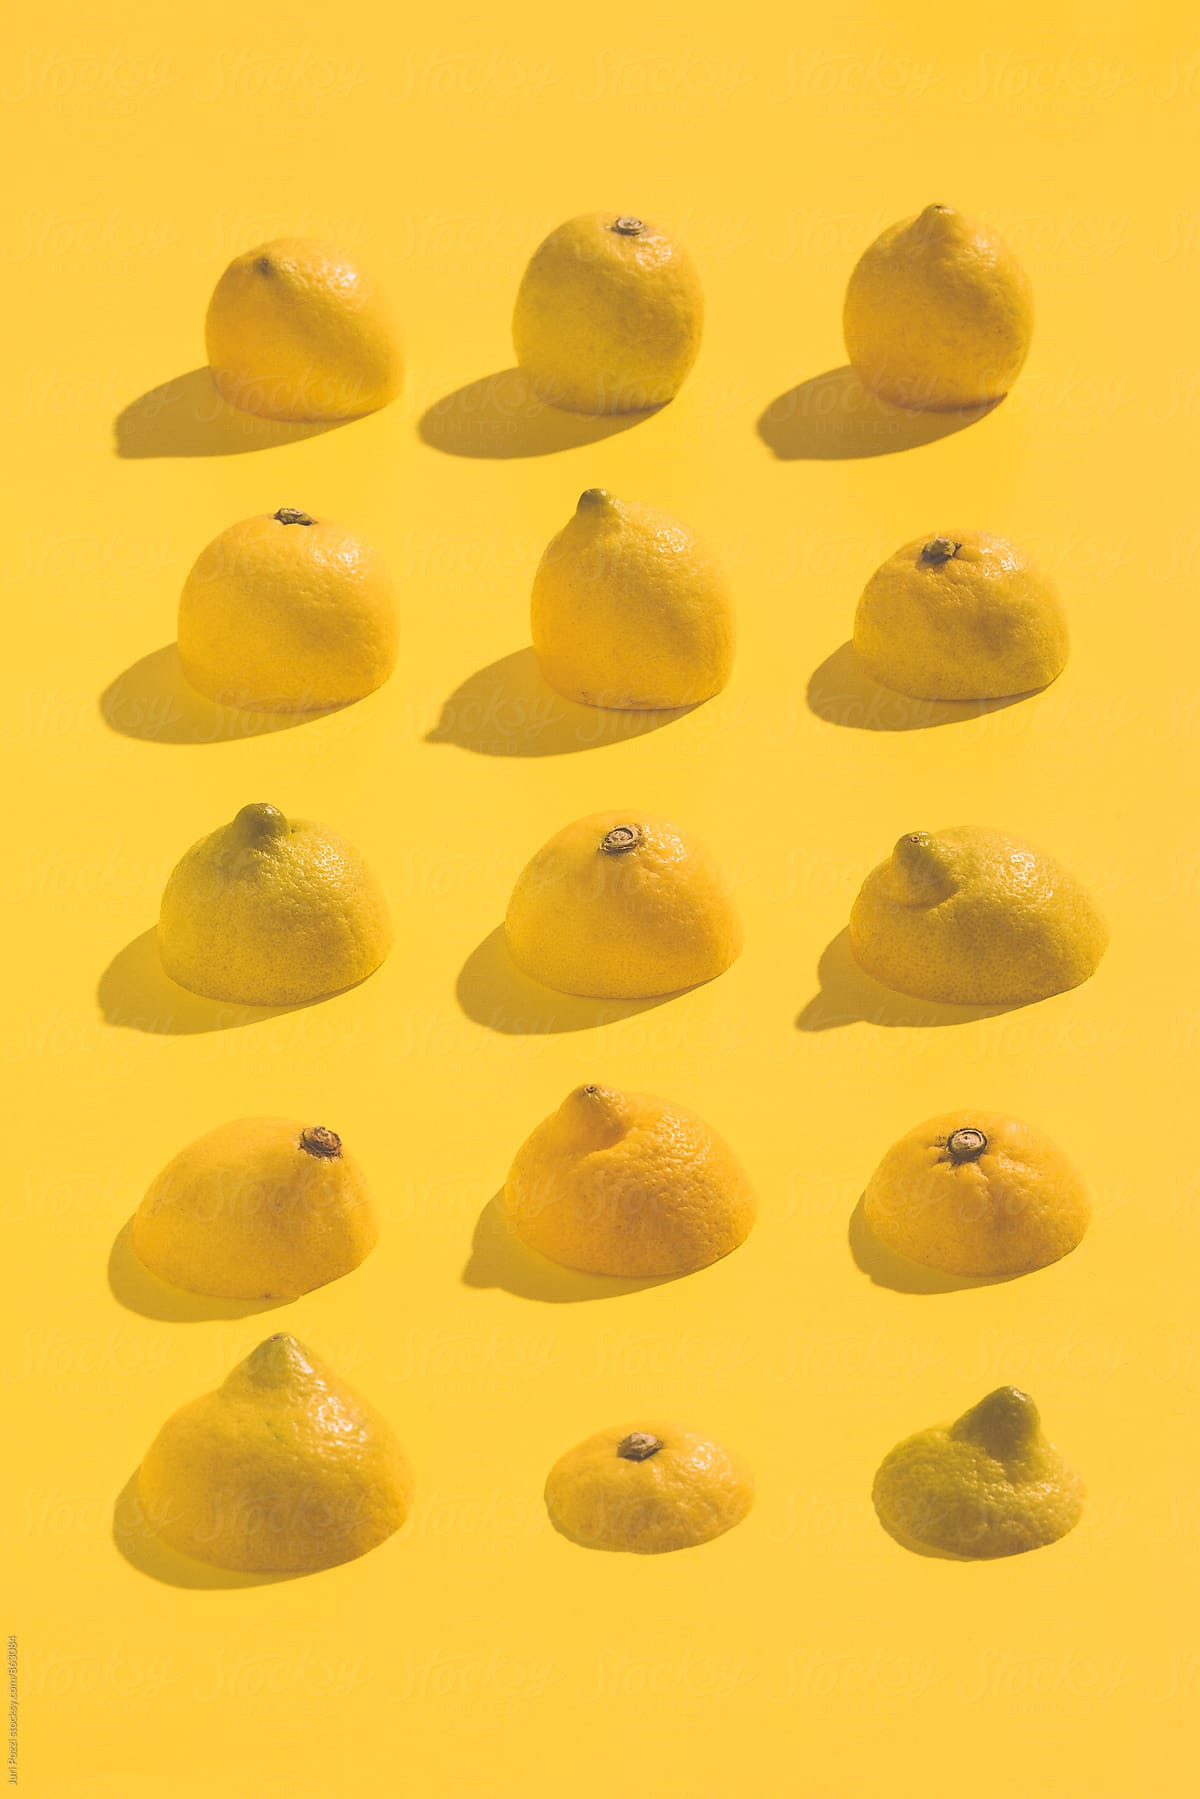 Yellow lemons on a yellow background